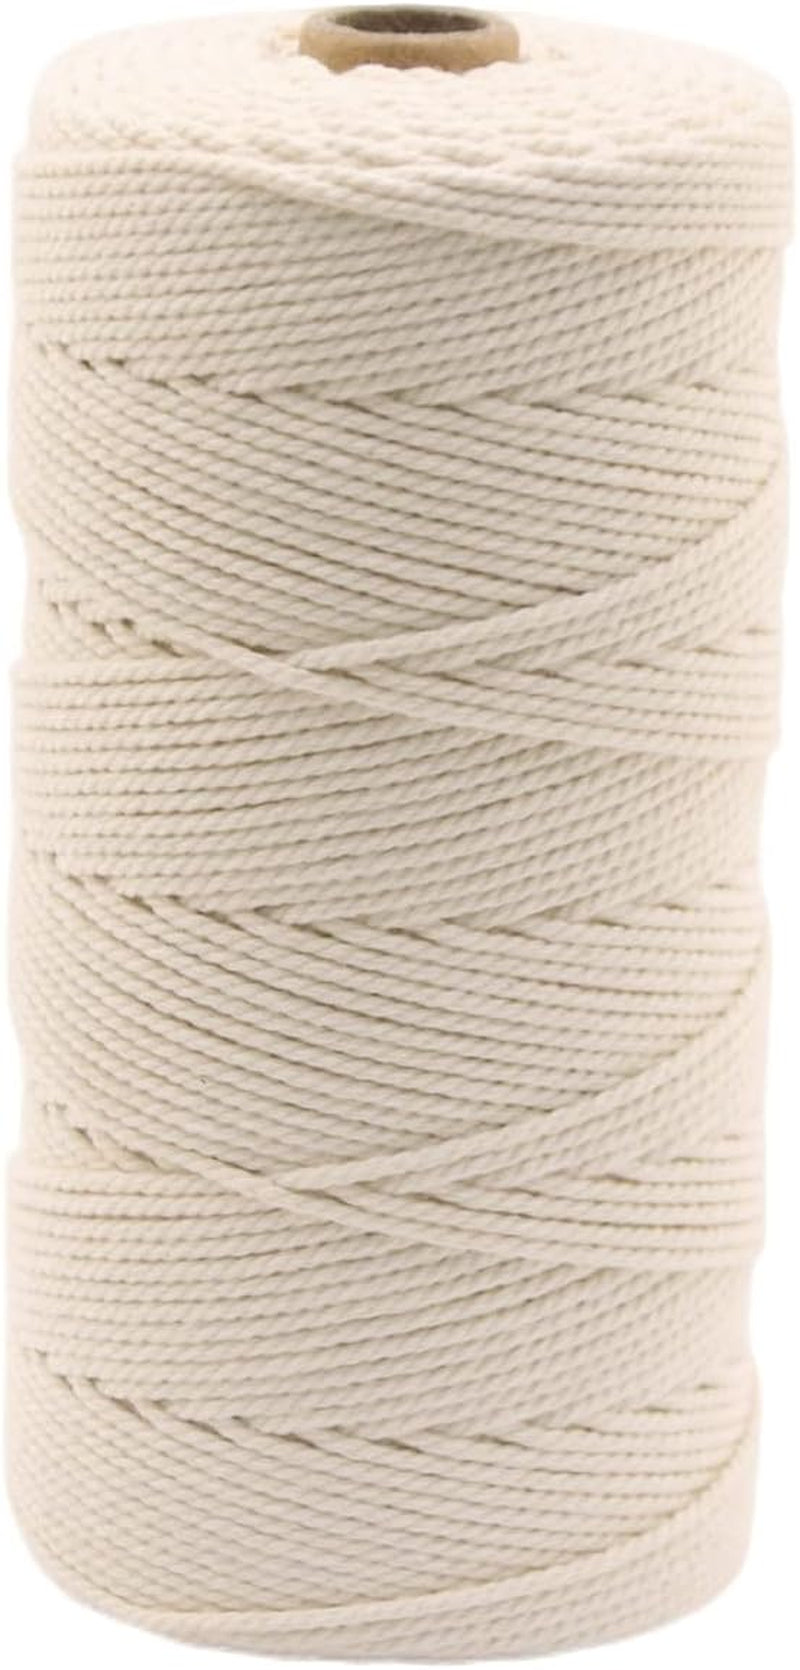 Macrame Cord 3Mm X 328Yards Natural Macrame Cotton Rope Colored Macrame Rope Soft Cotton Cord Macrame Supplies Craft Rope Macrame Yarn for Plant Hanger Wall Hanger Dreamcatcher (Beige)